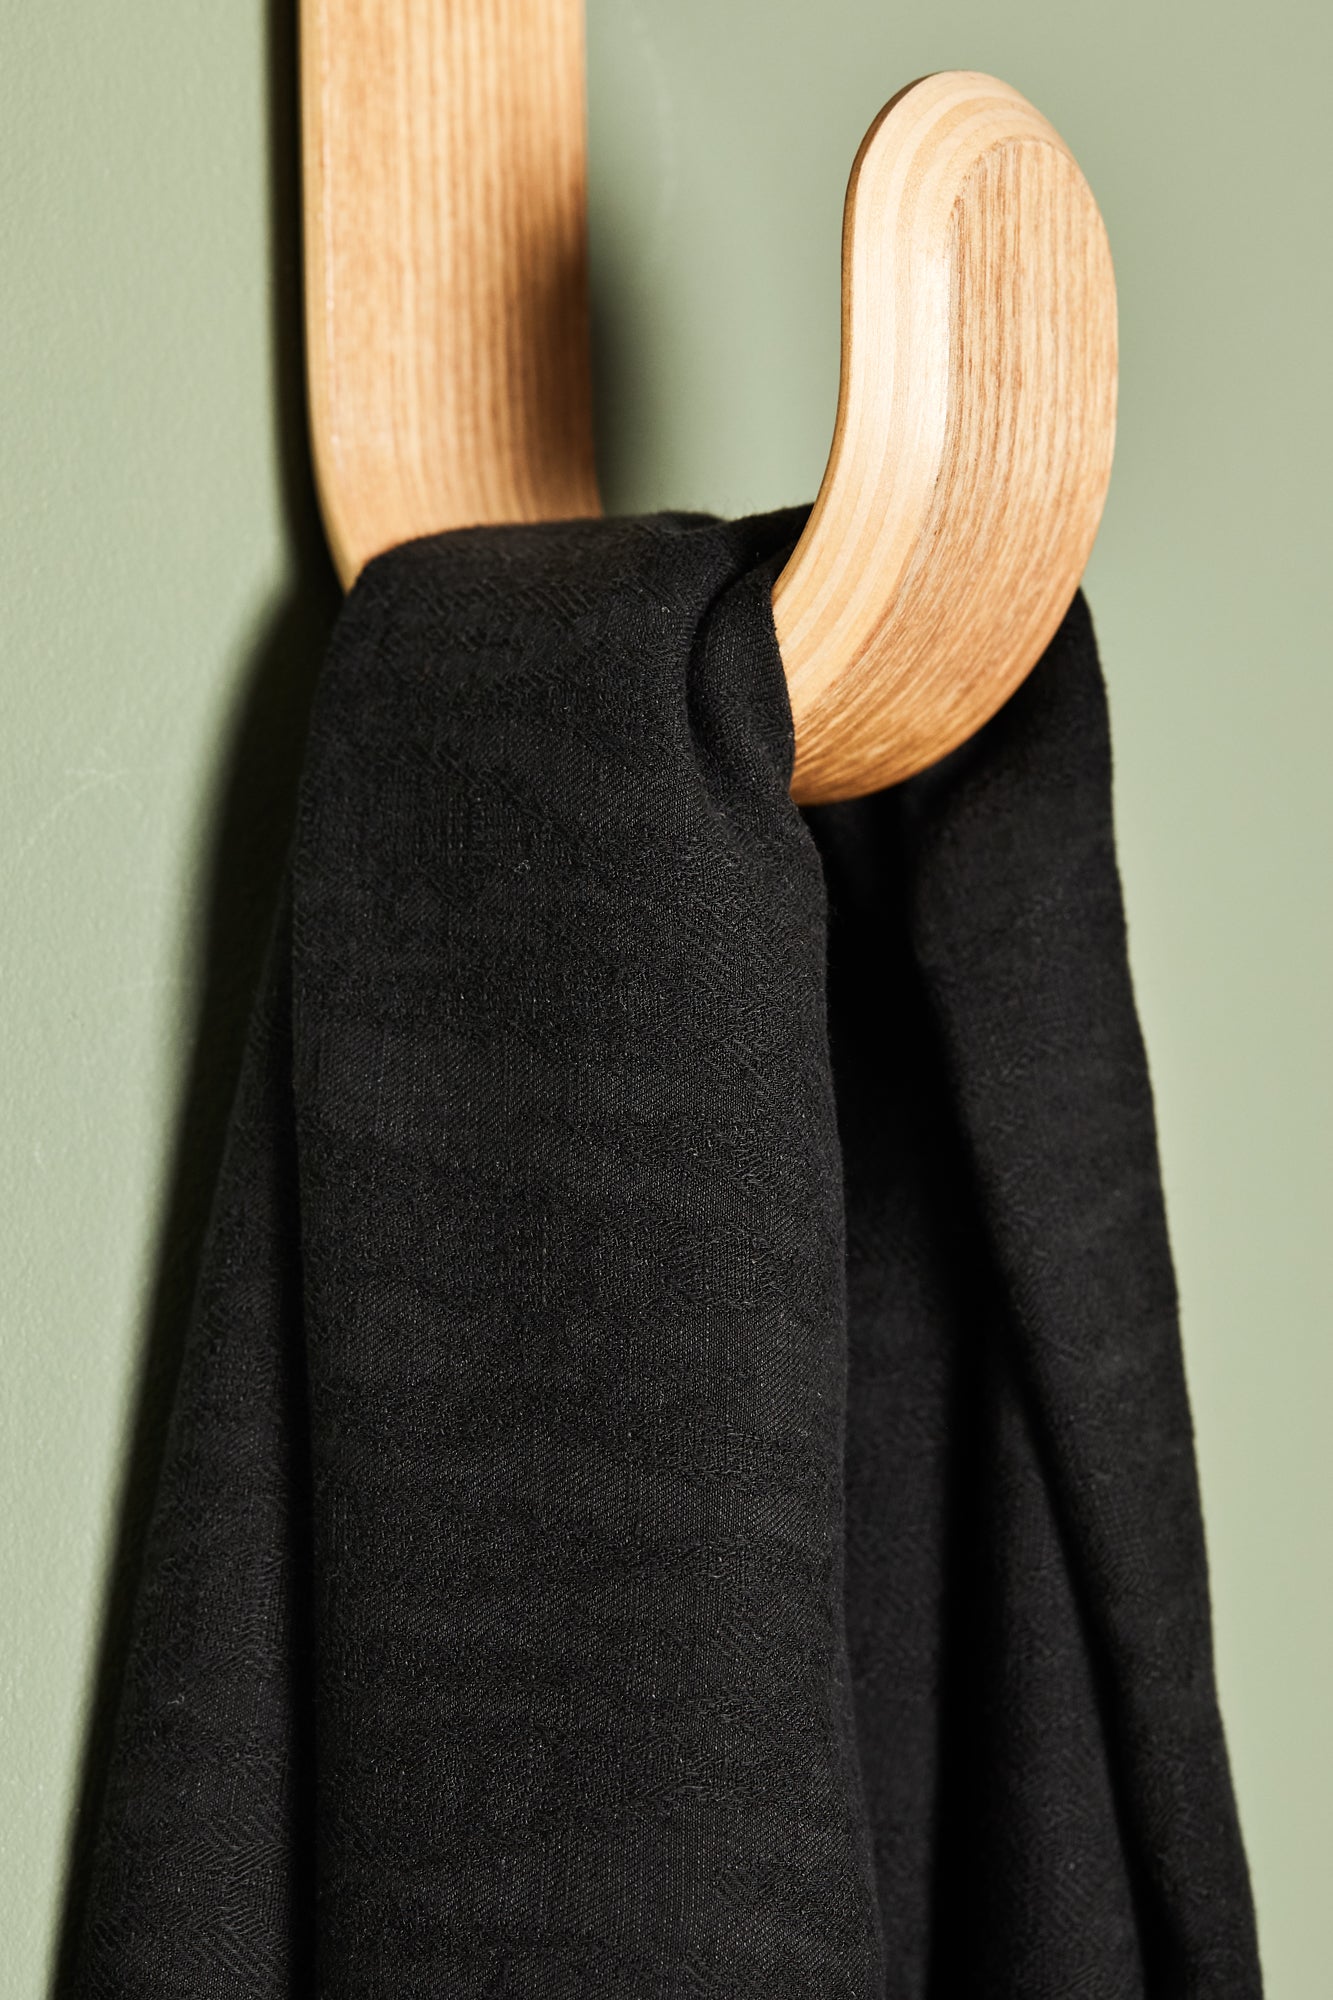 Black linen tencel sewing fabric hanging on hook